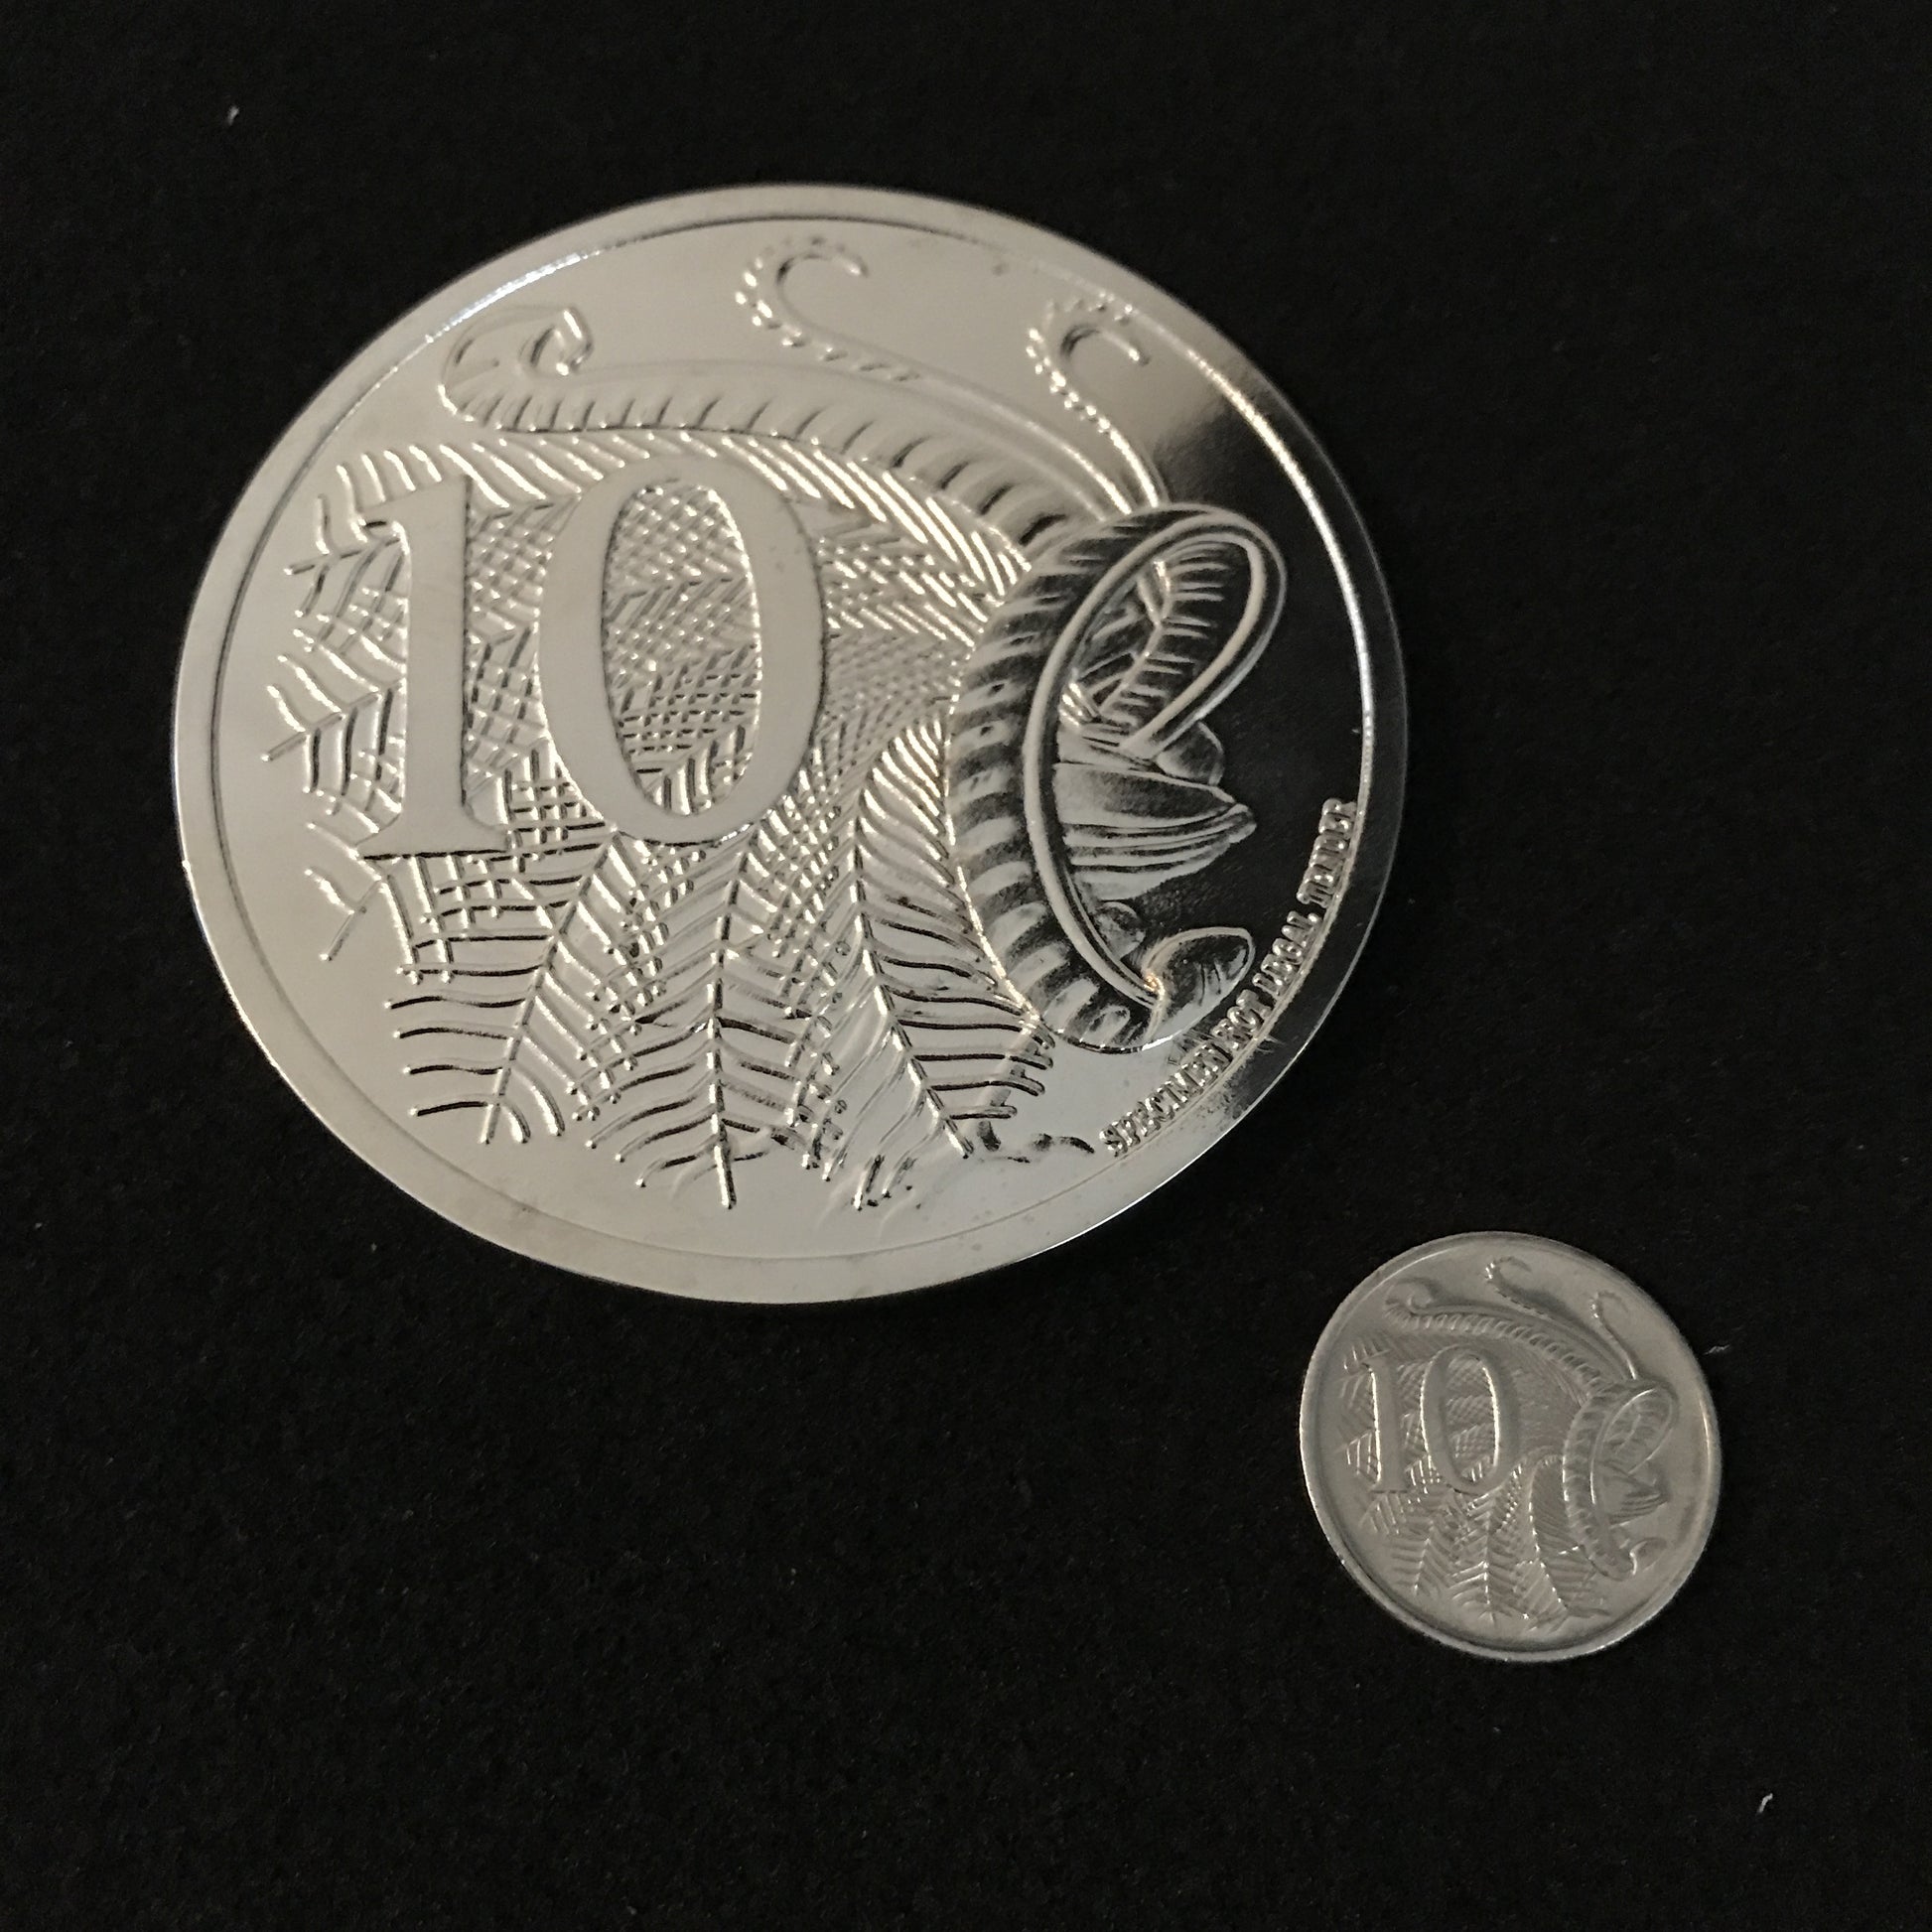 Jumbo Coin - Australian 10c (7.5cm/3inch) - Available at pipermagic.com.au